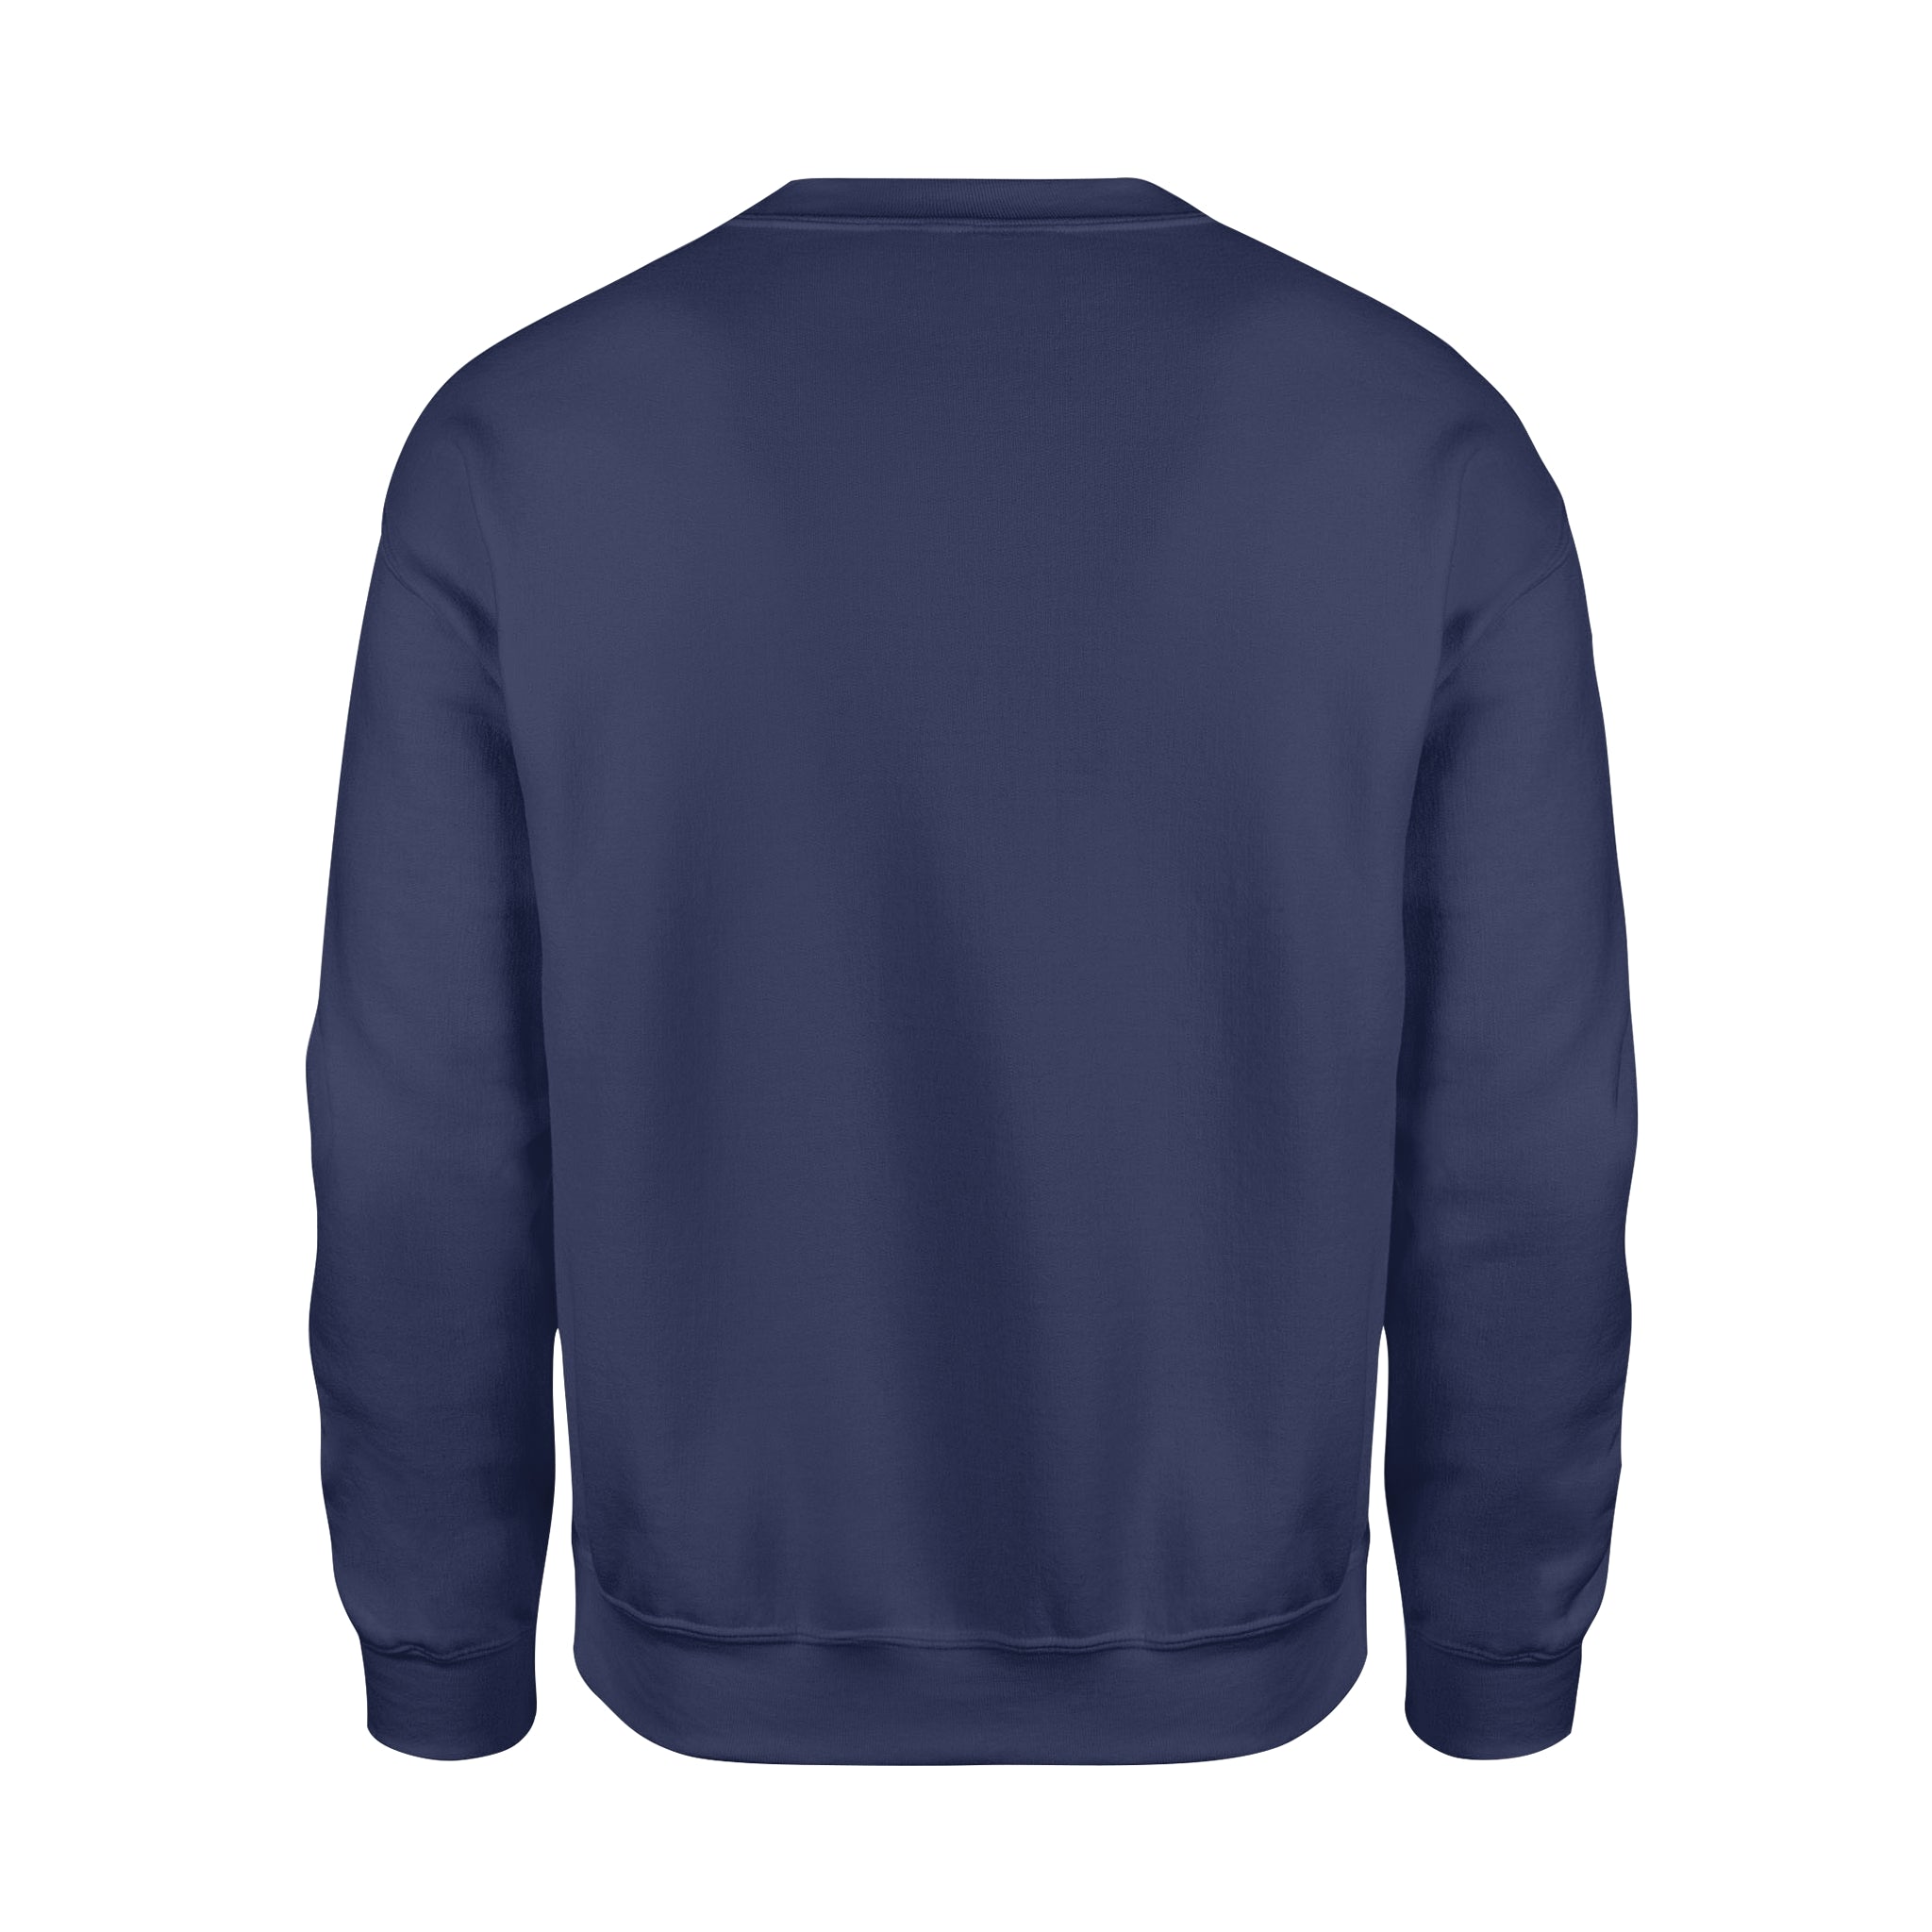 It's Time For A New Adventure - Fleece Sweatshirt